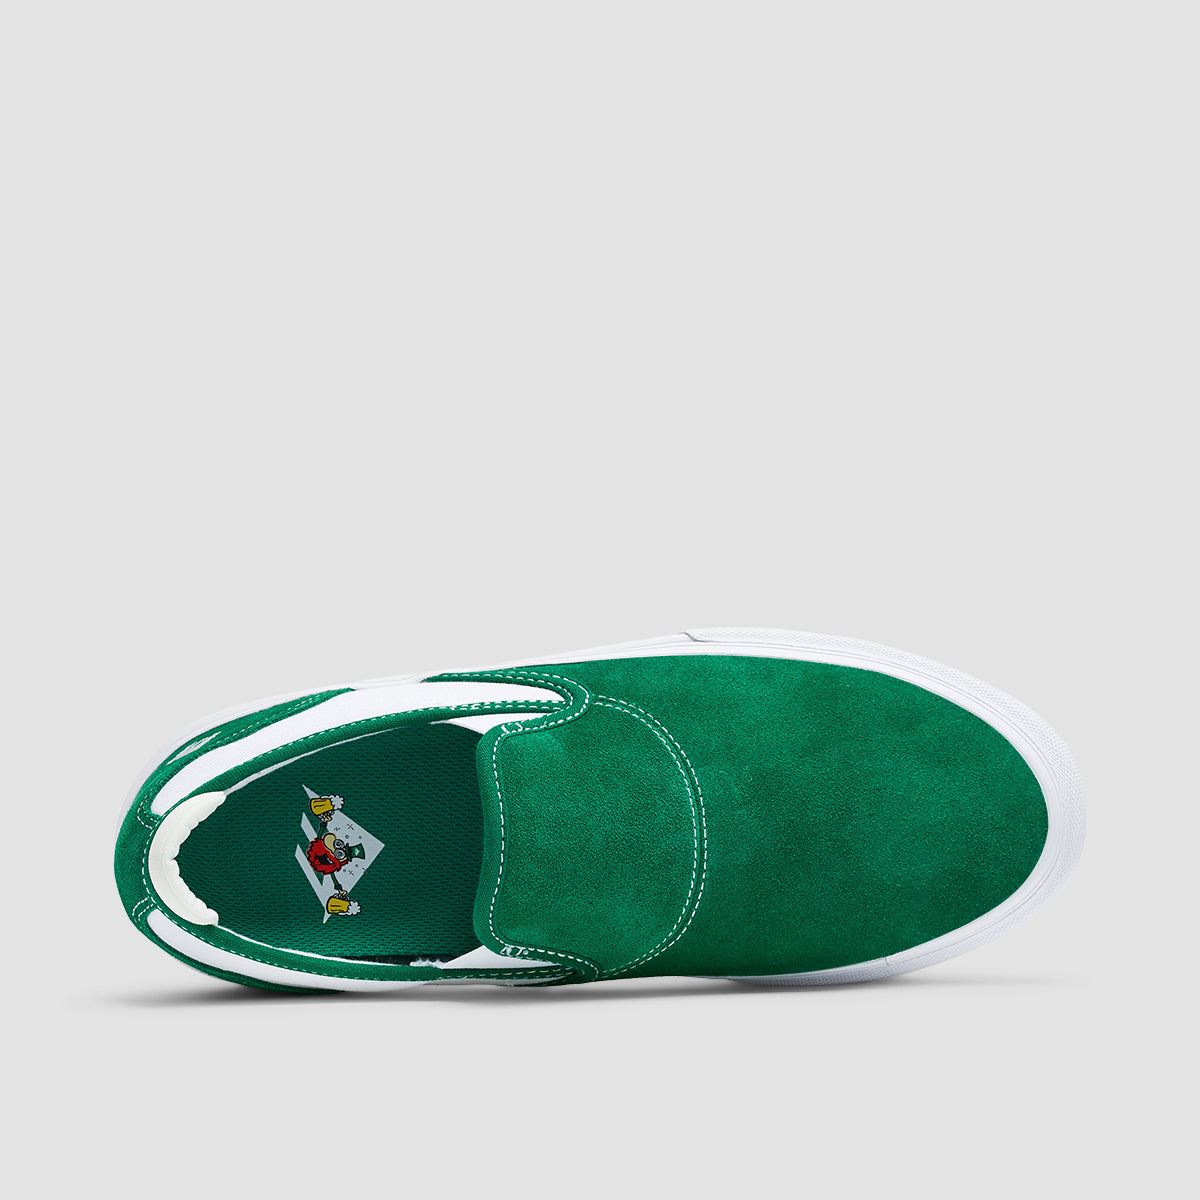 Emerica Wino G6 Slip On Shoes Green/White/Gum